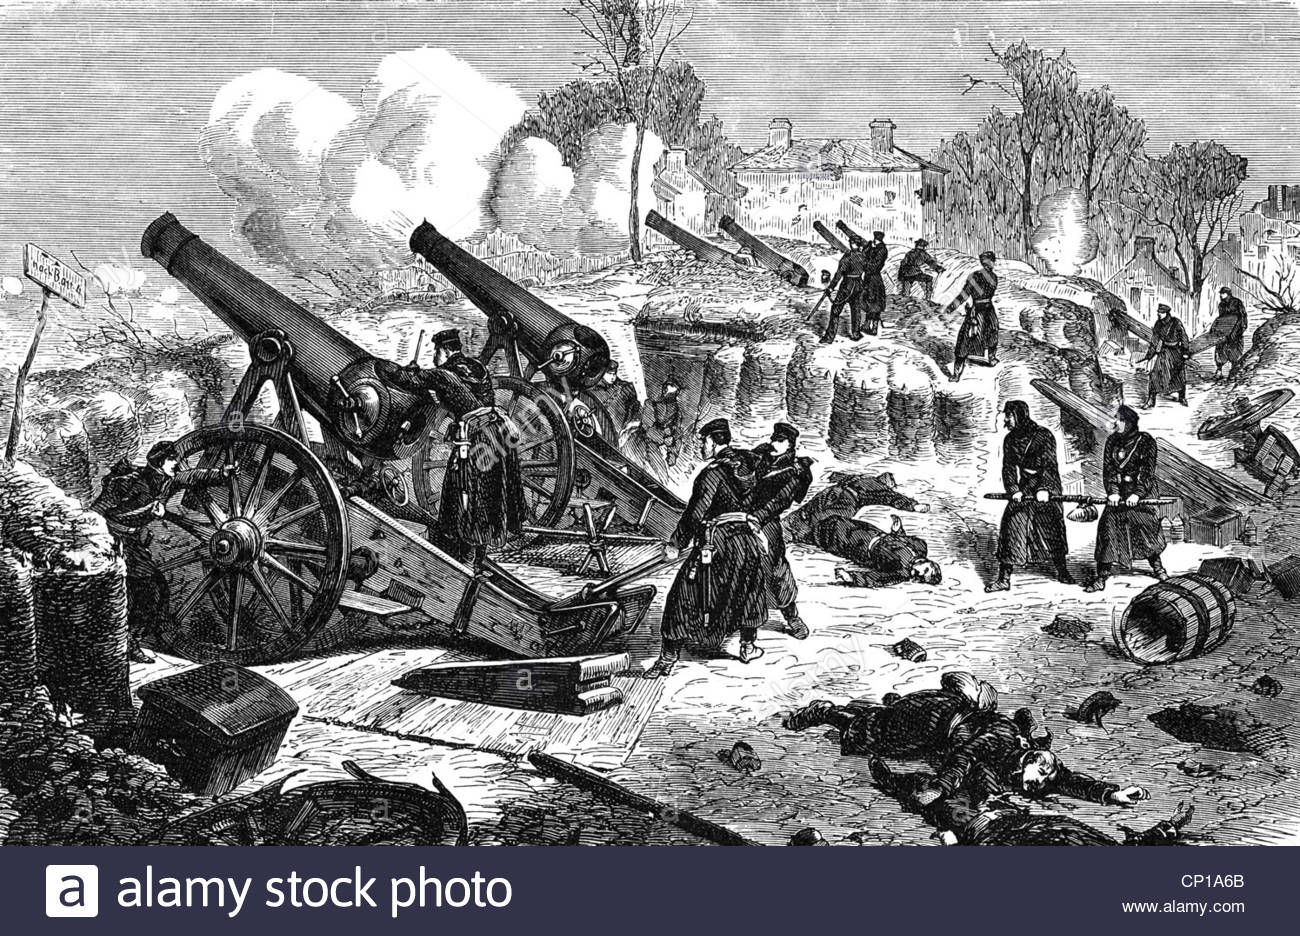 events-franco-prussian-war-1870-1871-siege-of-paris-1991870-2811871-cp1a6b.jpg